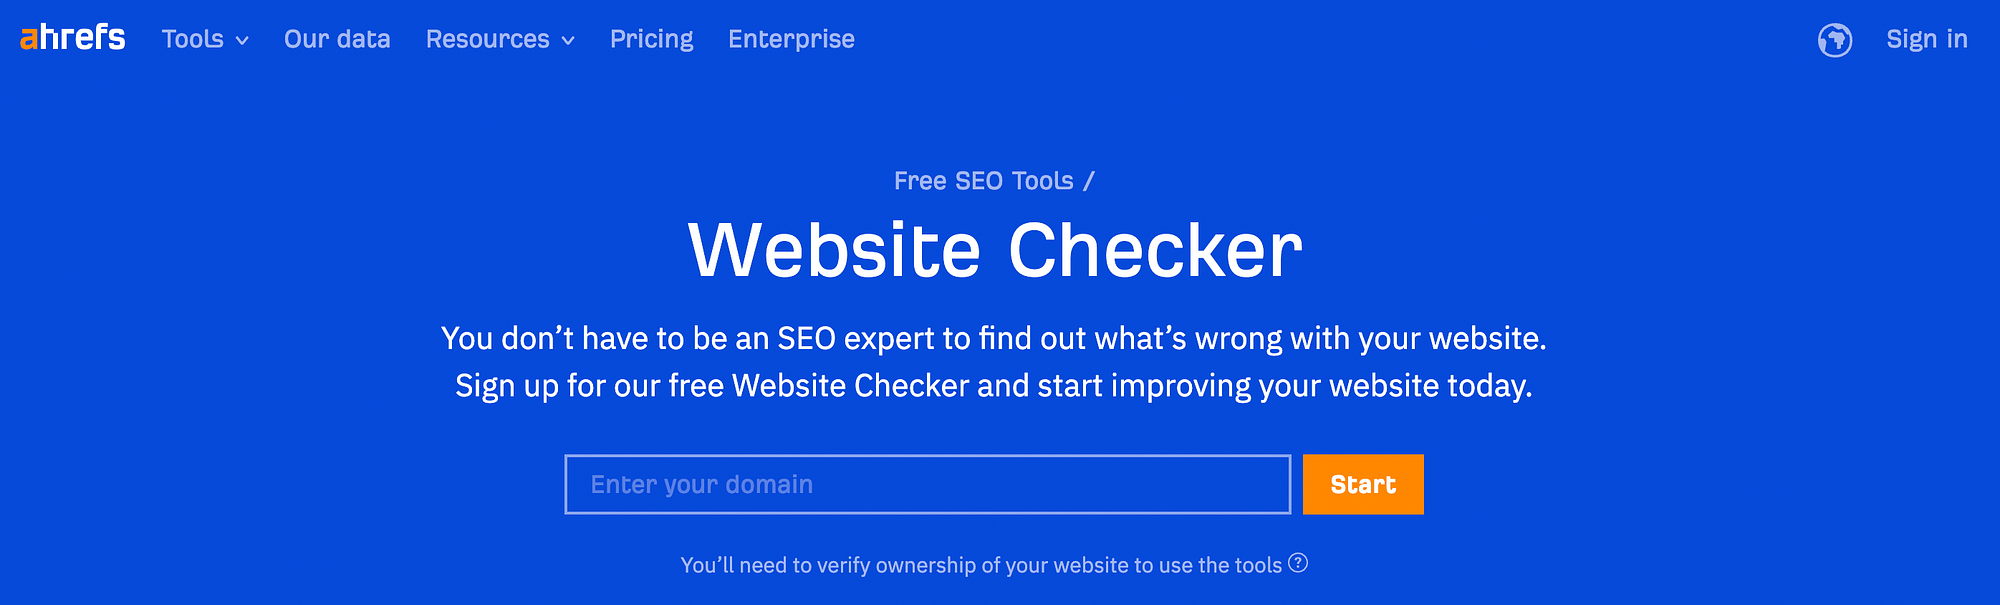 The ahrefs Website Checker tool